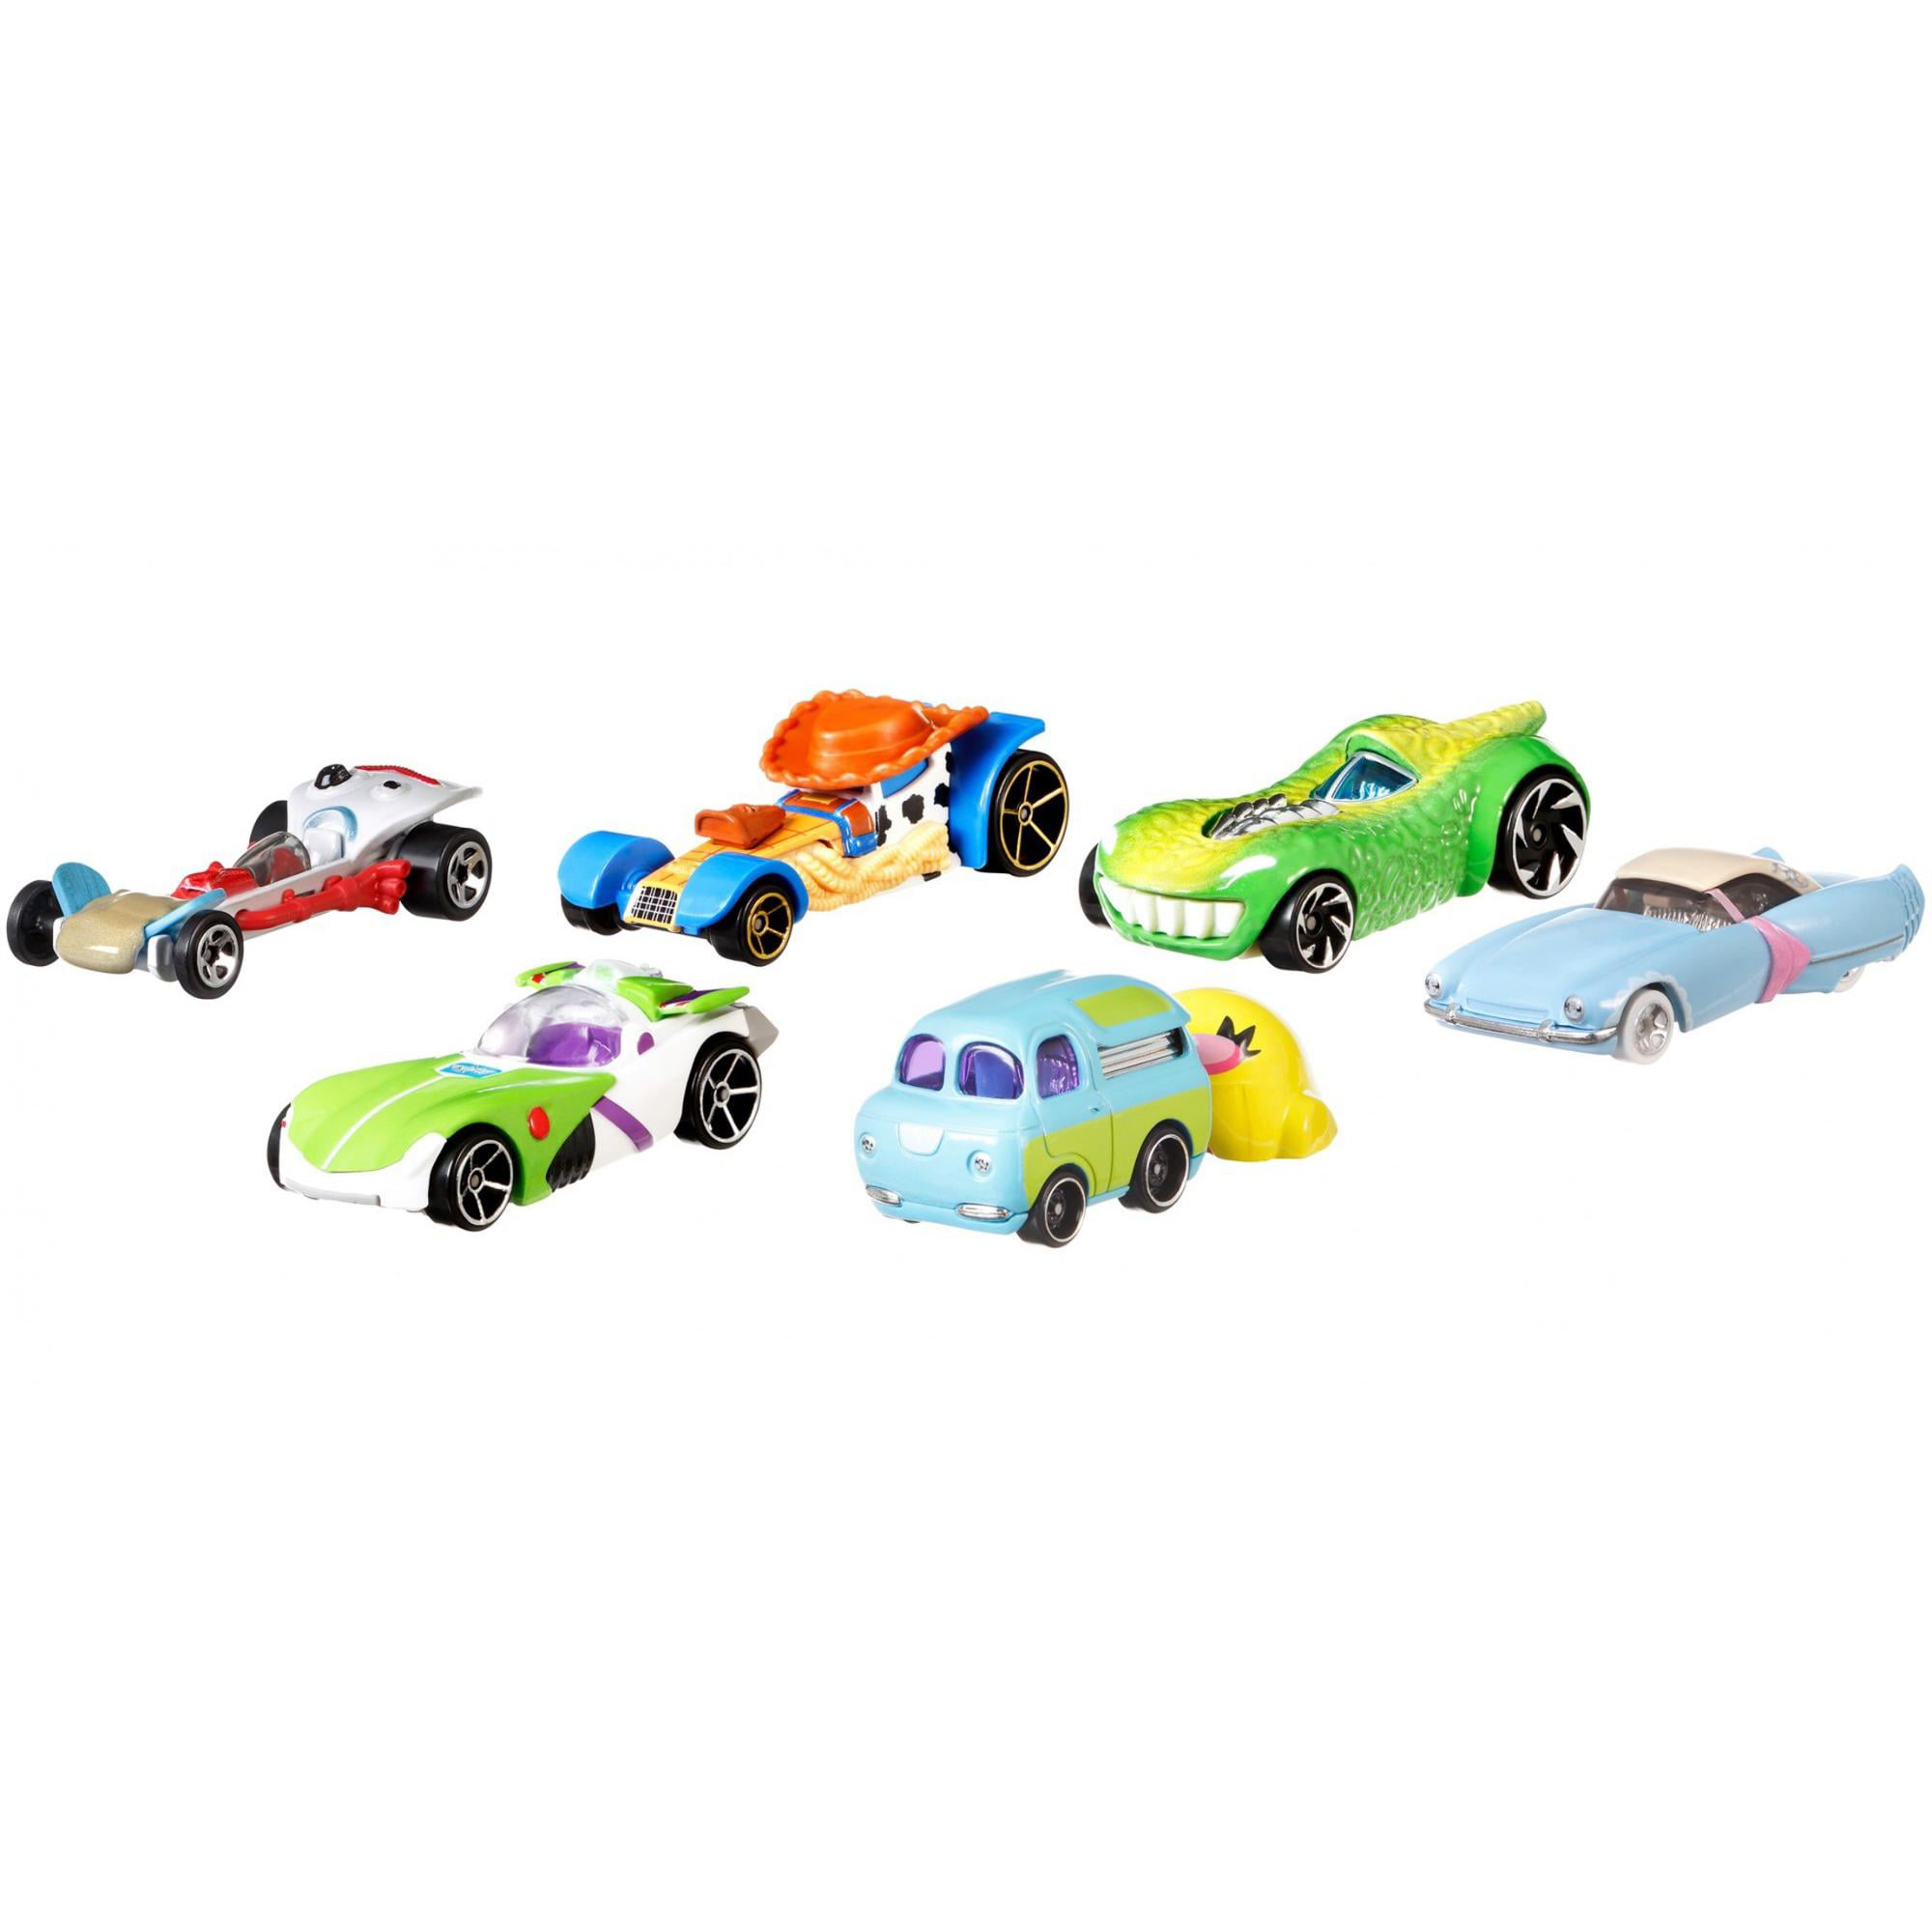 Mattel HotWheels Character Cars Toy Story 4 alle 8 Autos im Set ca.6 cm groß 